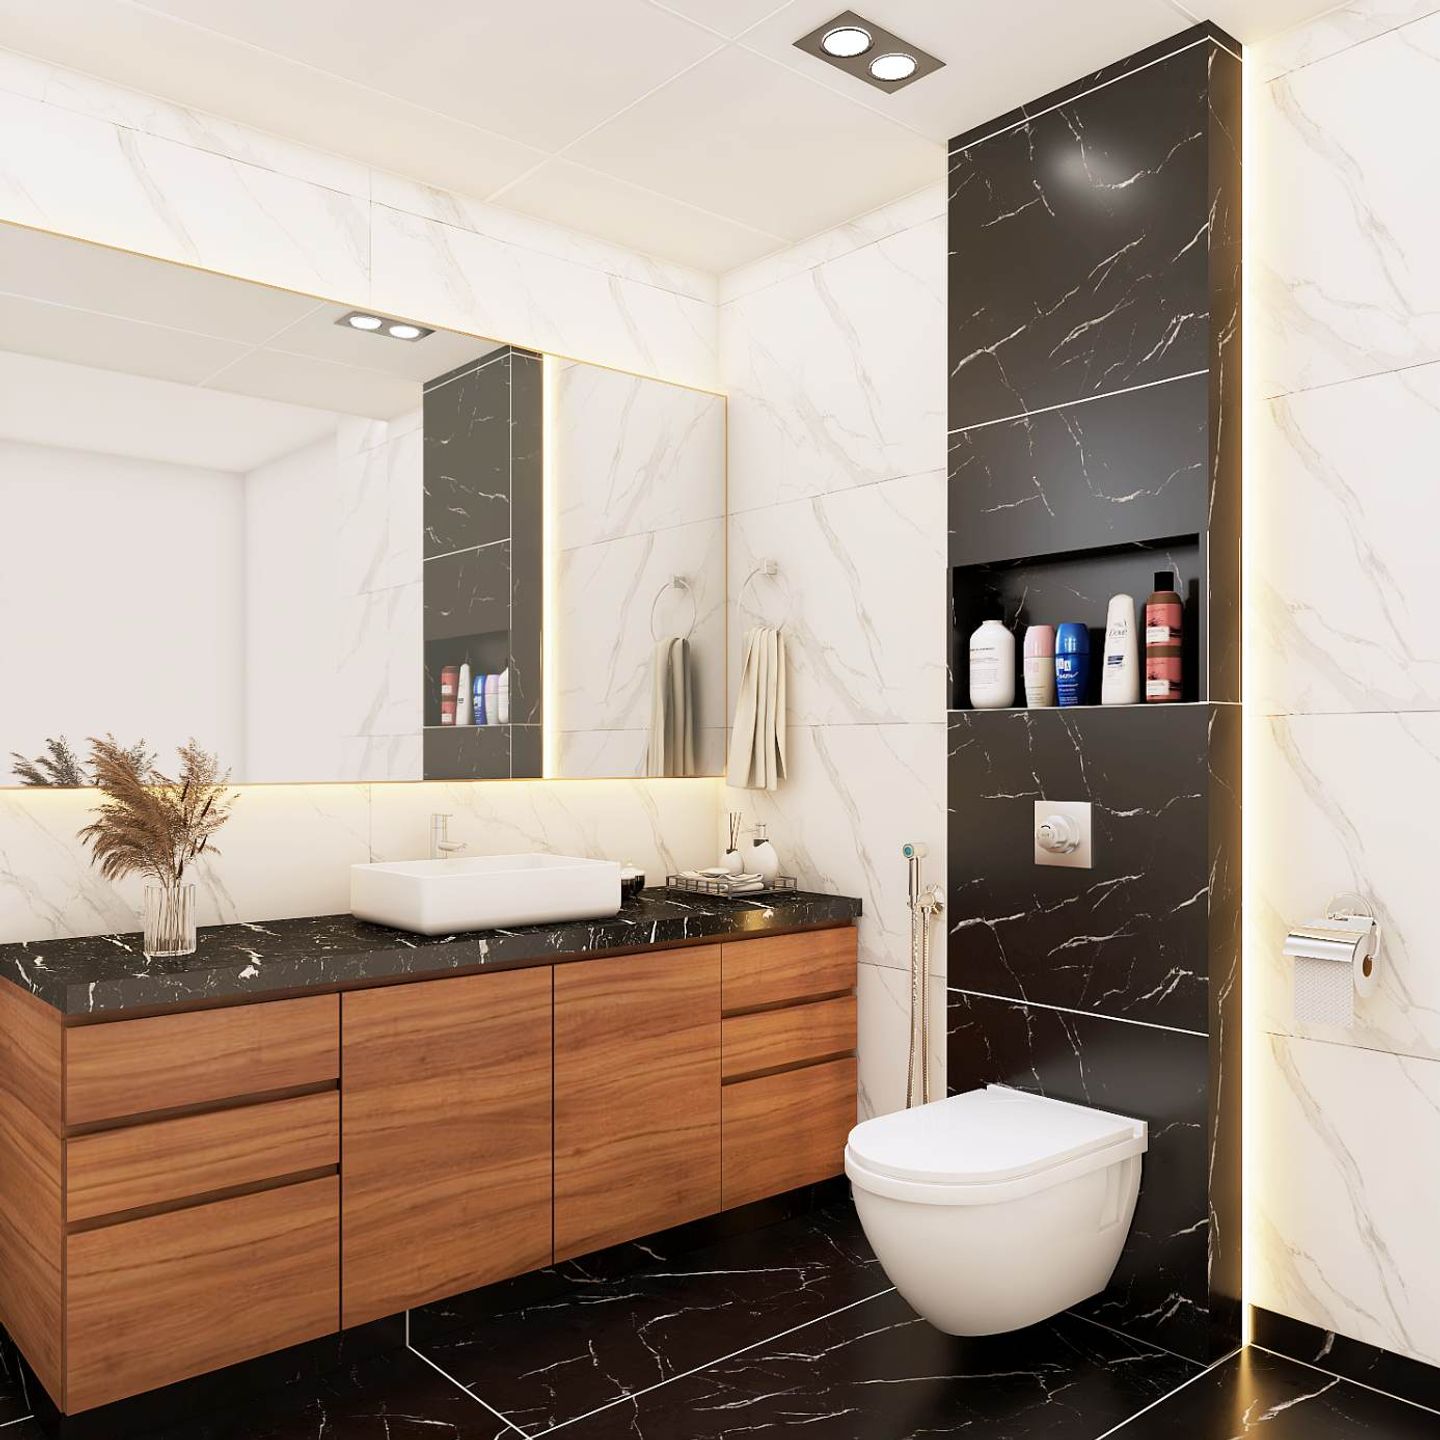 Bathroom Design With A Backlit Mirror - Livspace